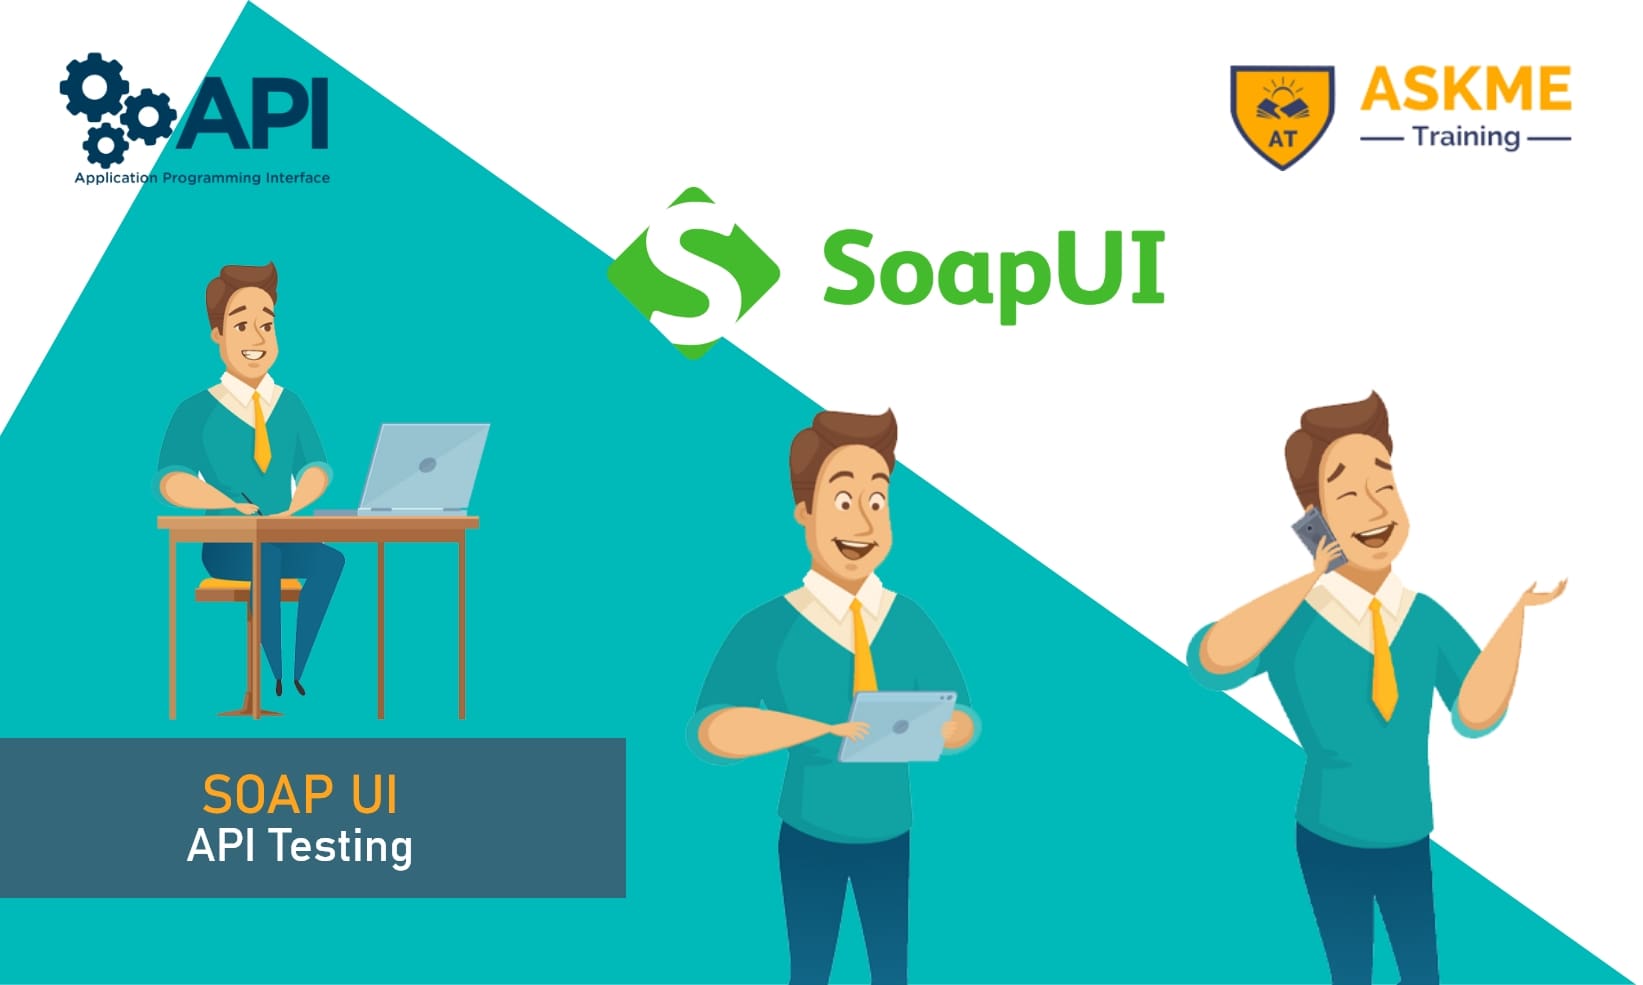 API Testing - WEB SERVICES, REST API & SOAP UI Testing